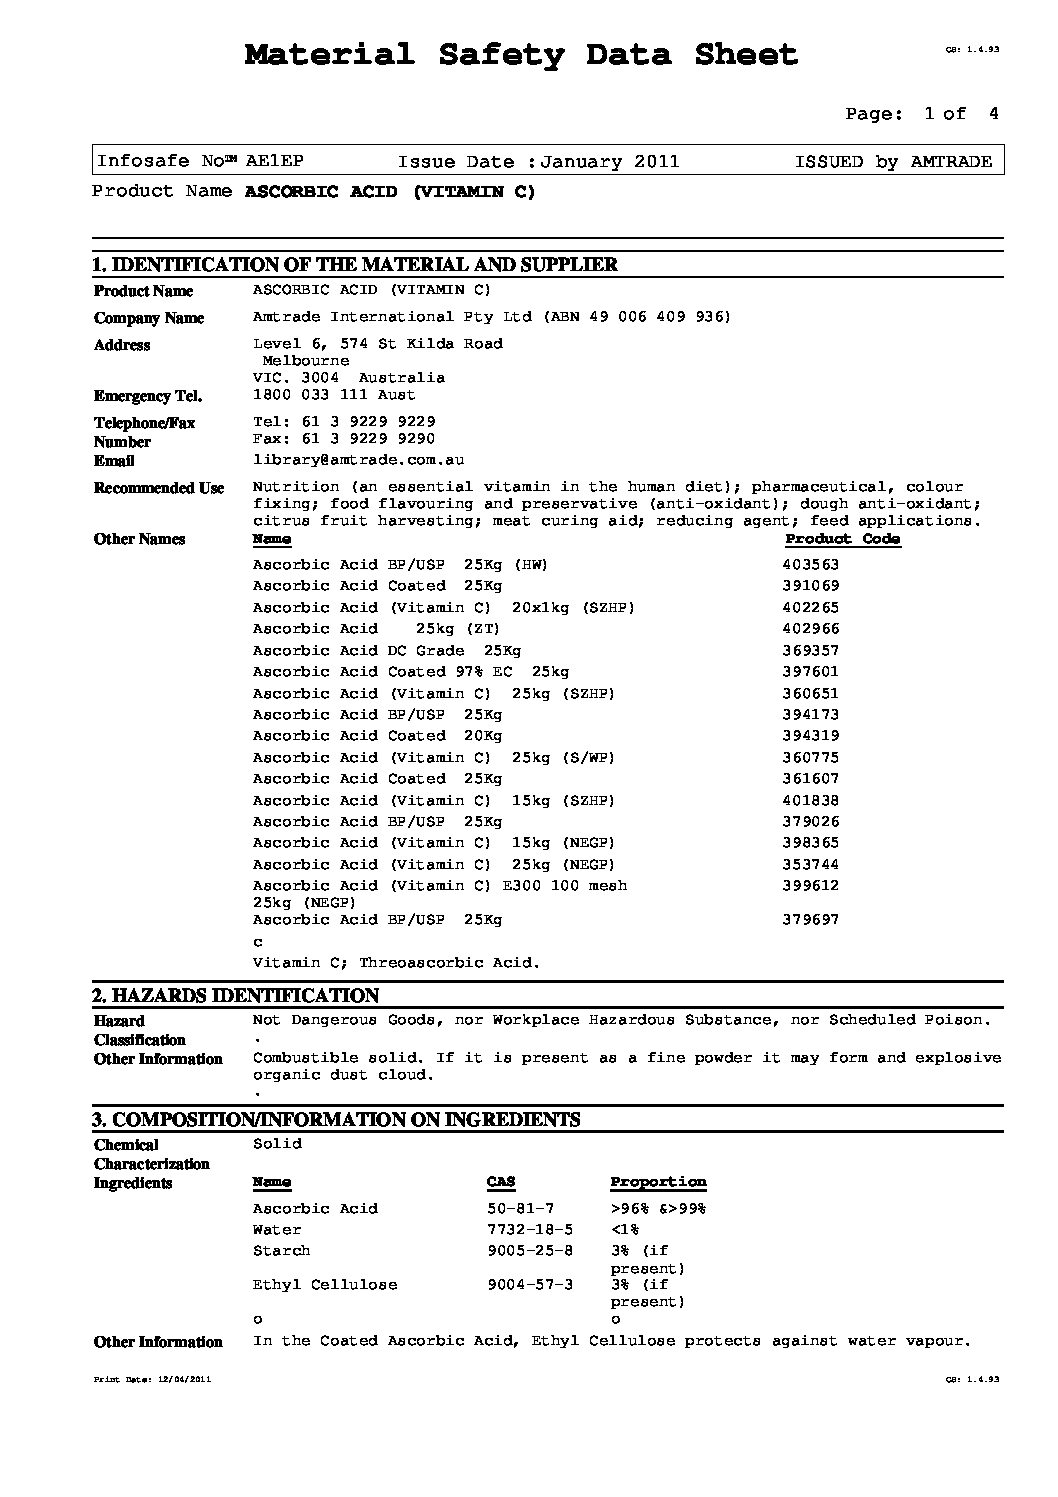 Material Safety Data Sheet - Ascorbic Acid - Grapeworks - Tanium ...